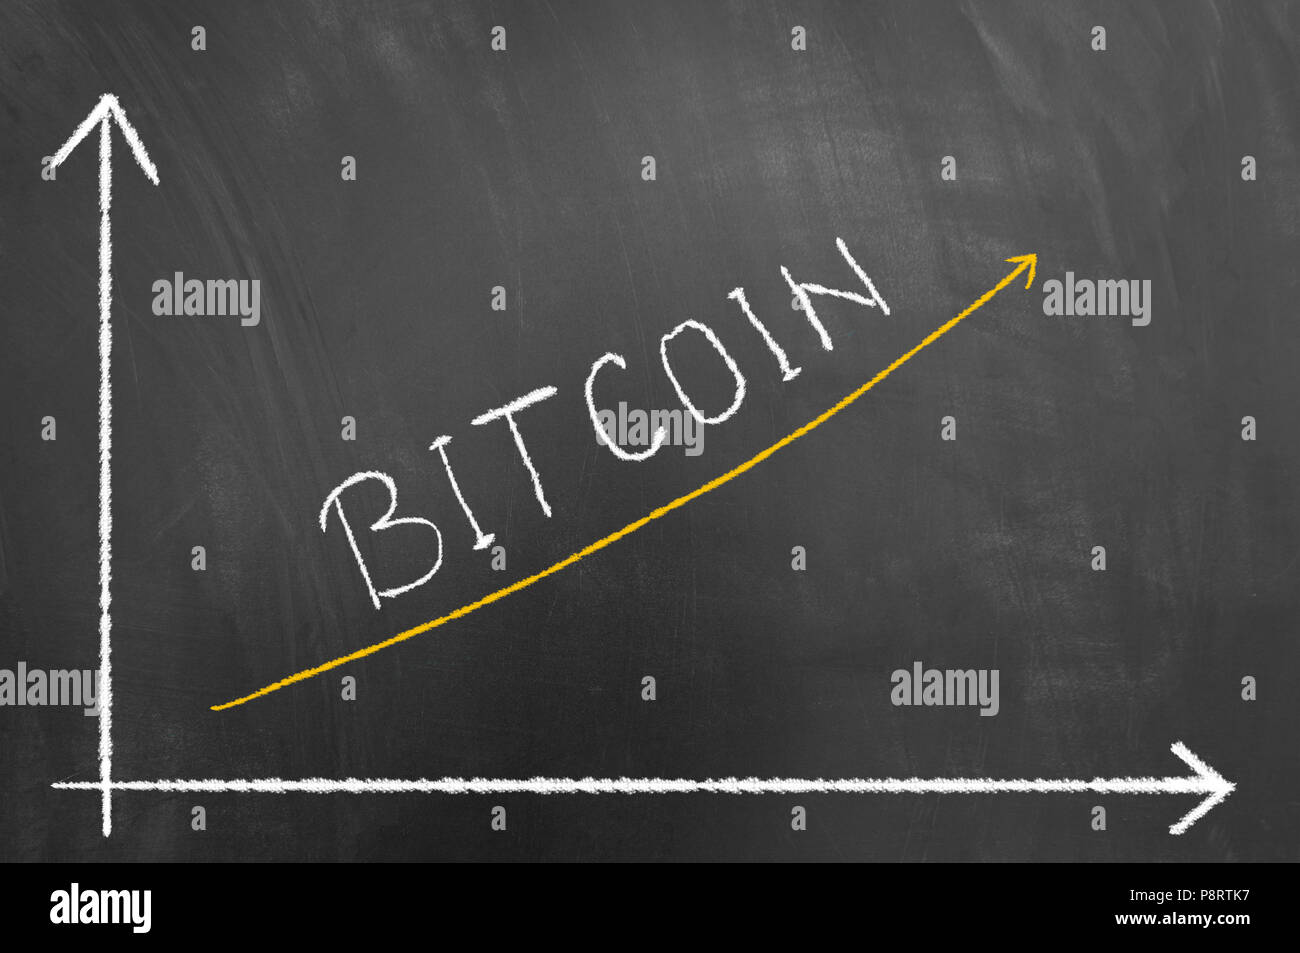 Grafico Bitcoin Con Flecha Hacia Arriba En La Pizarra O Pizarra Como - 